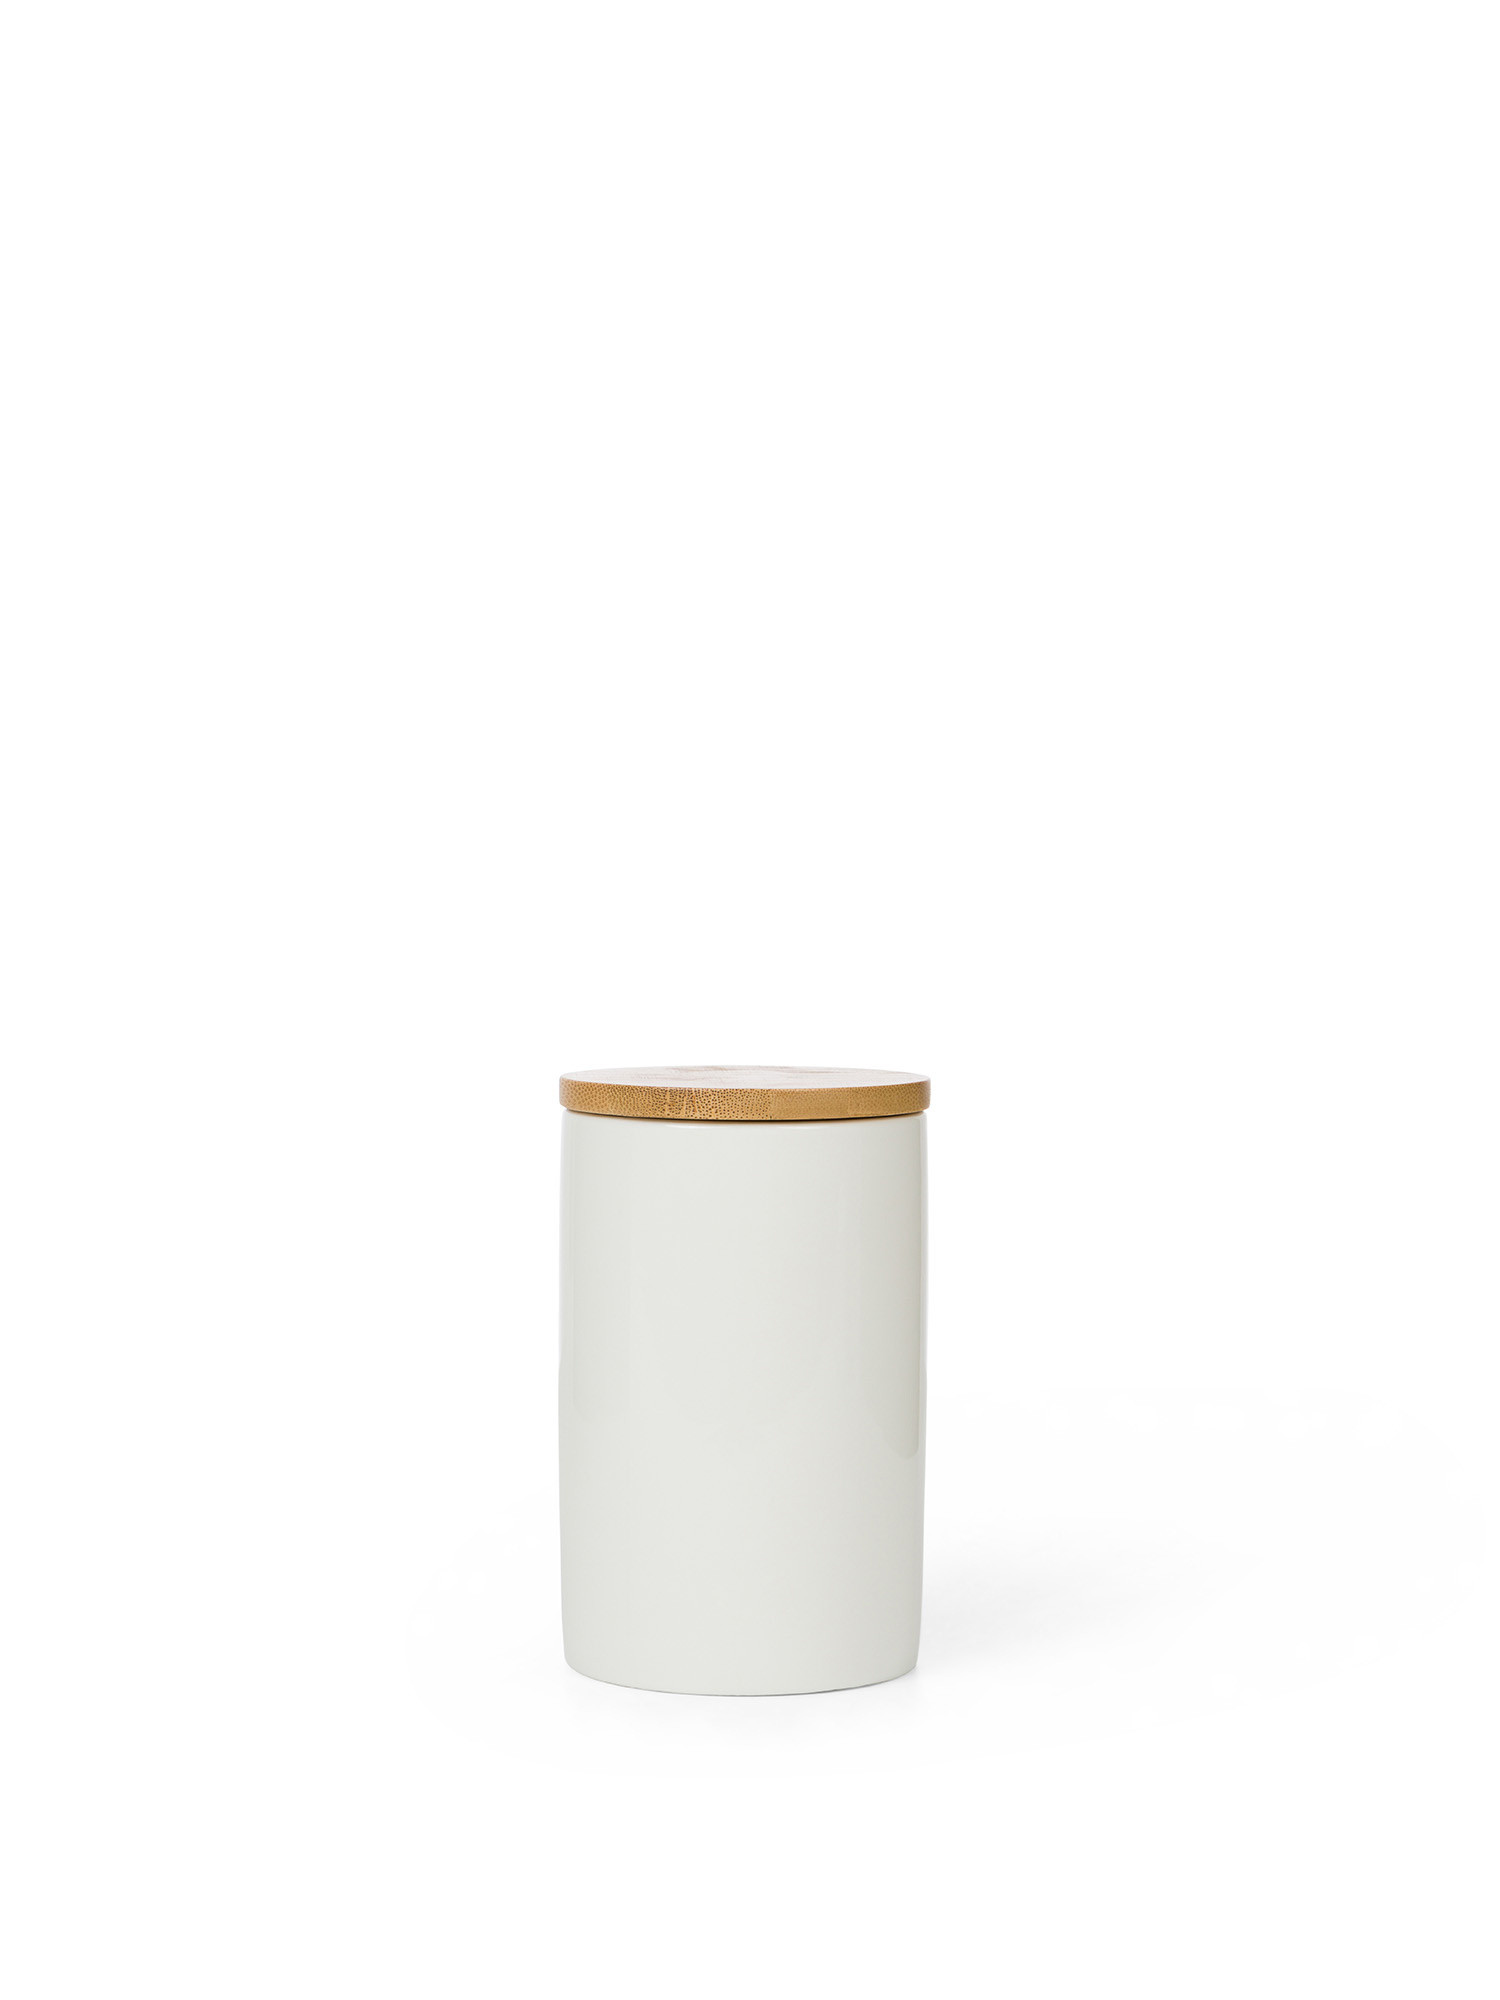 Porcelain jar with cap, White, large image number 0